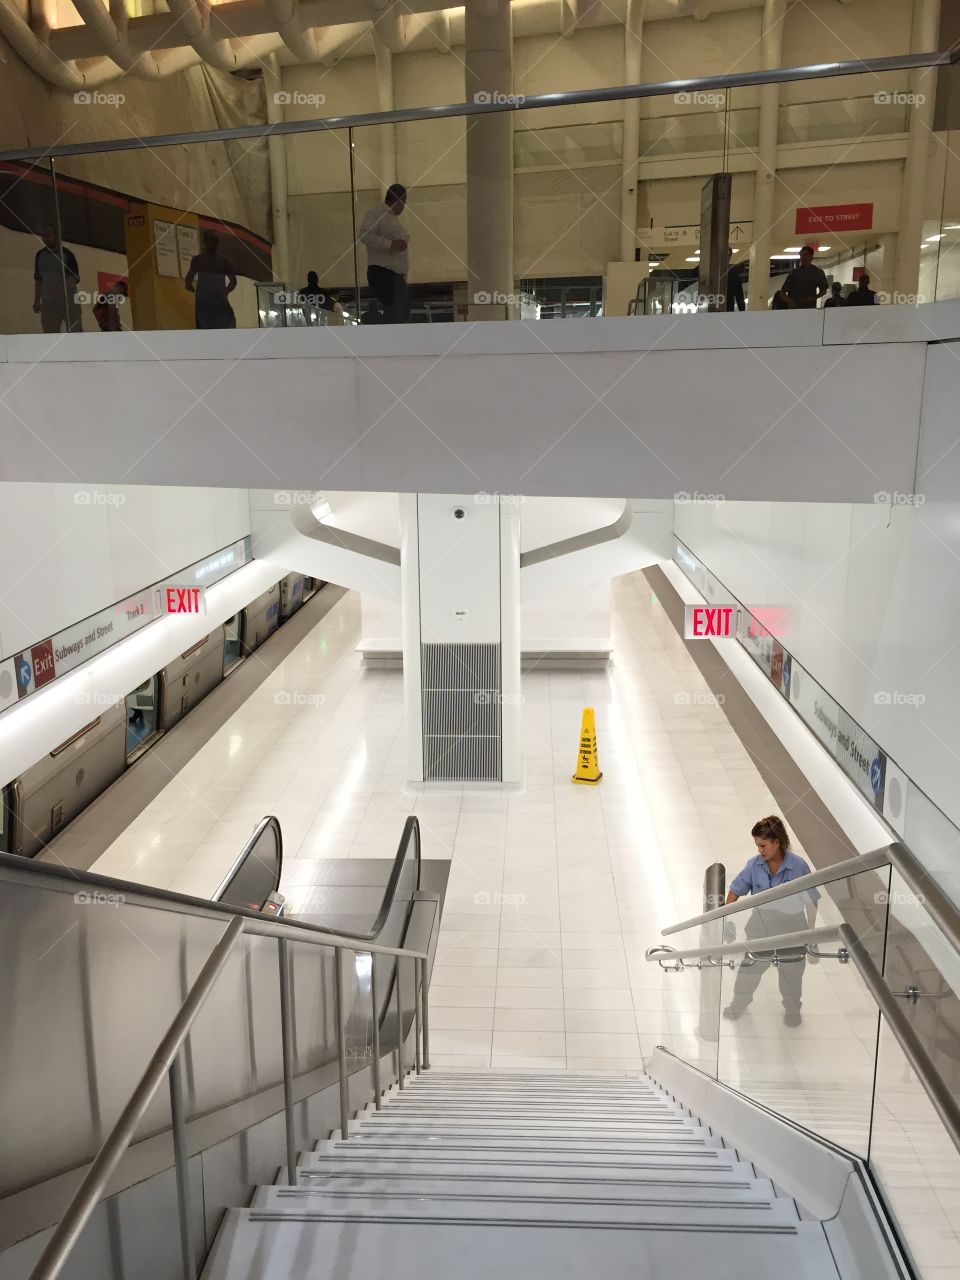 Escalator to Journal Square, New Jersey subway platform.